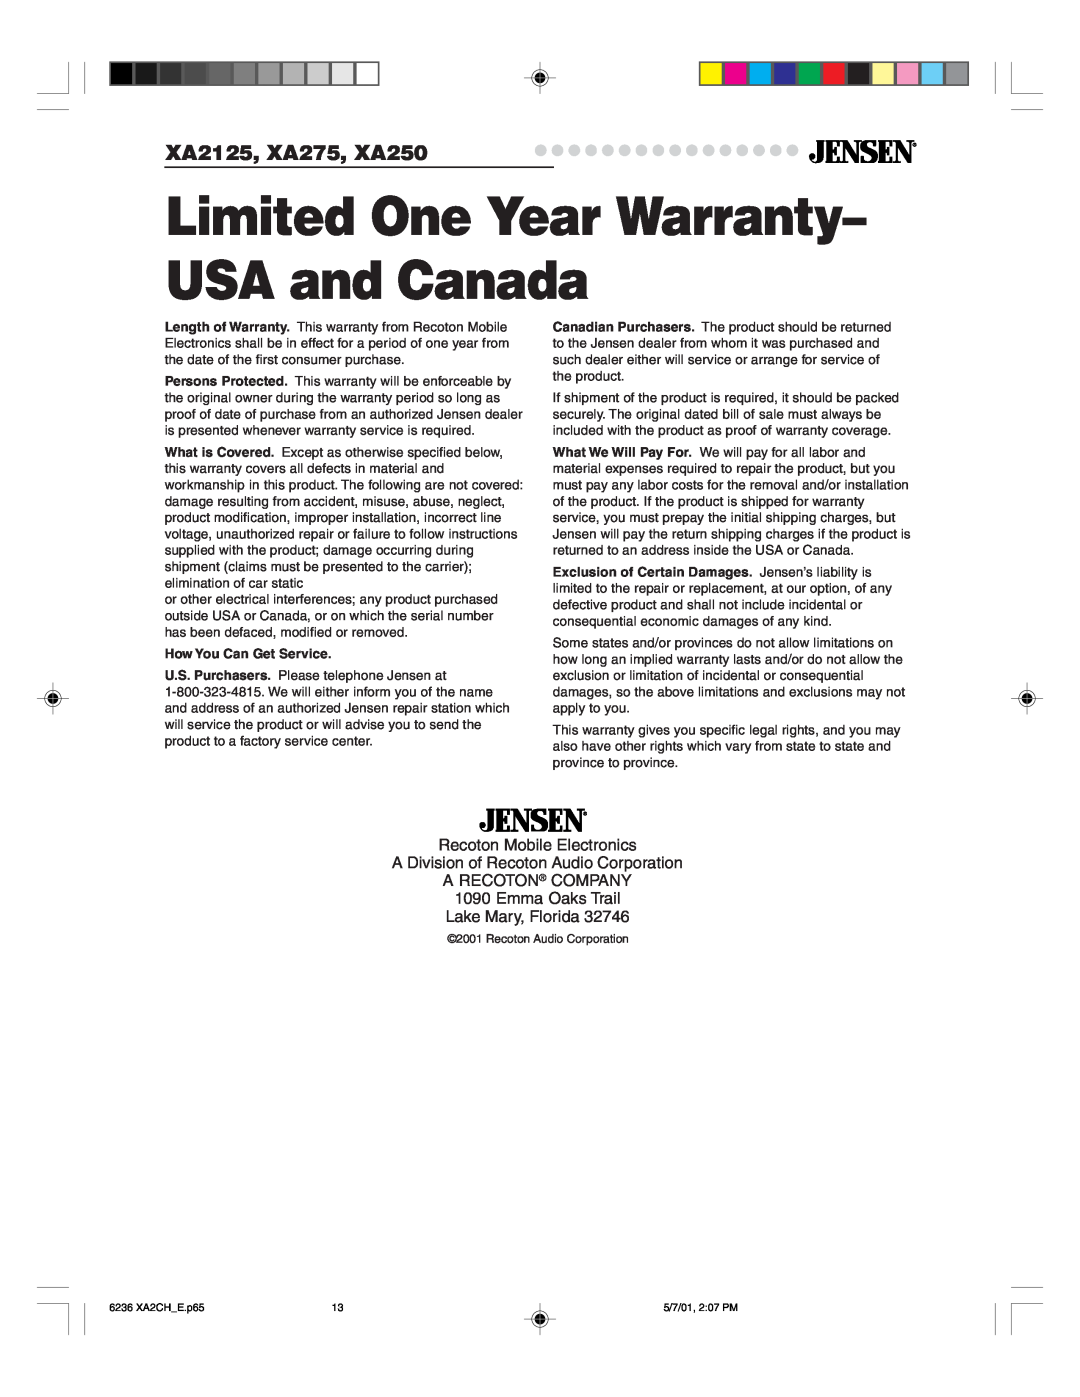 Jensen Tools warranty Limited One Year Warranty- USA and Canada, XA2125, XA275, XA250, Recoton Mobile Electronics 